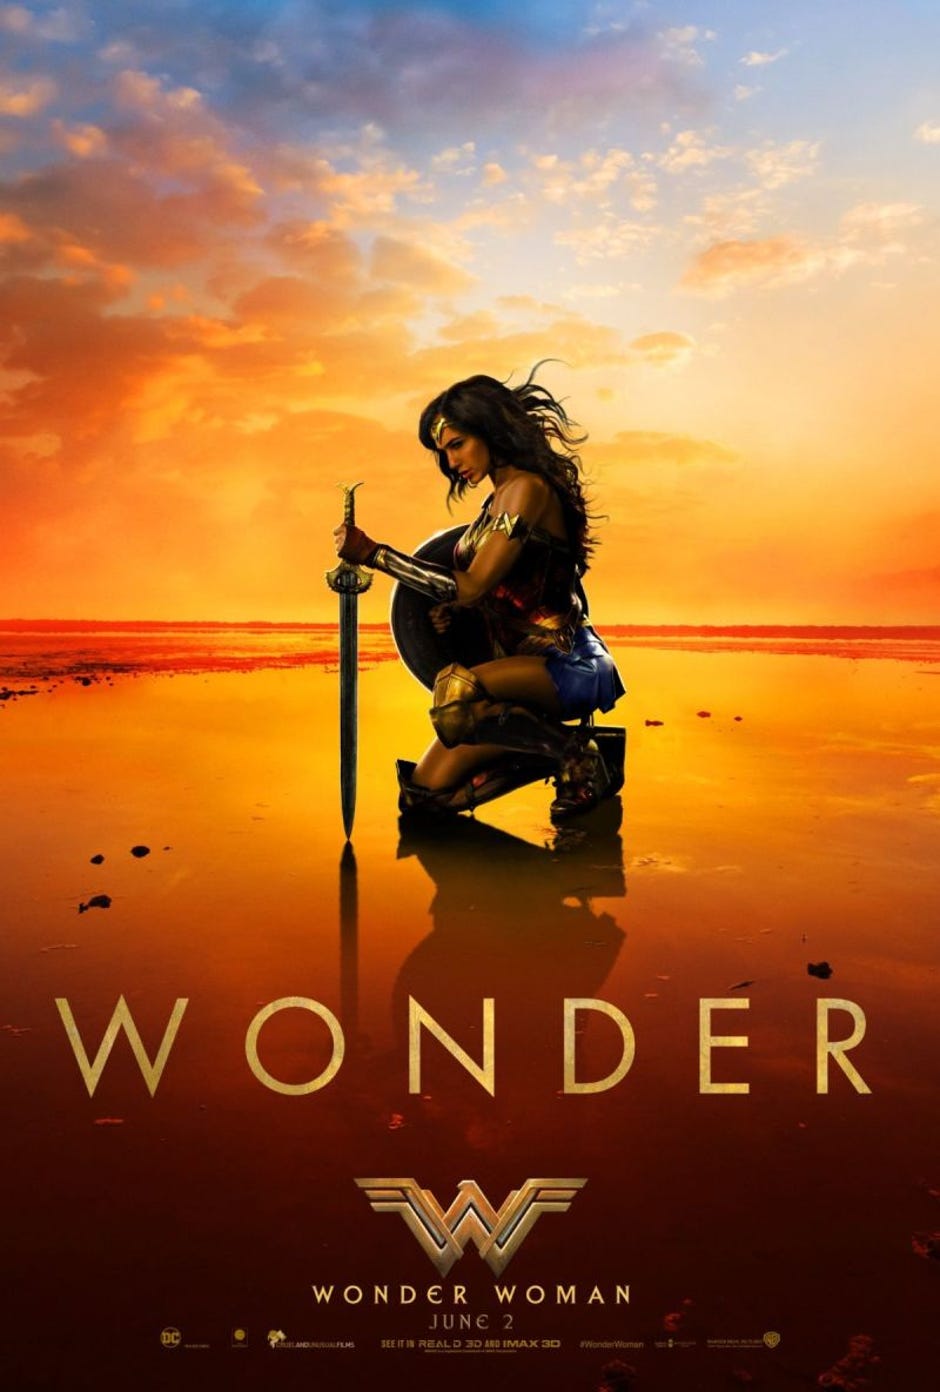 New 'Wonder Woman' trailer, poster show calm before combat - CNET